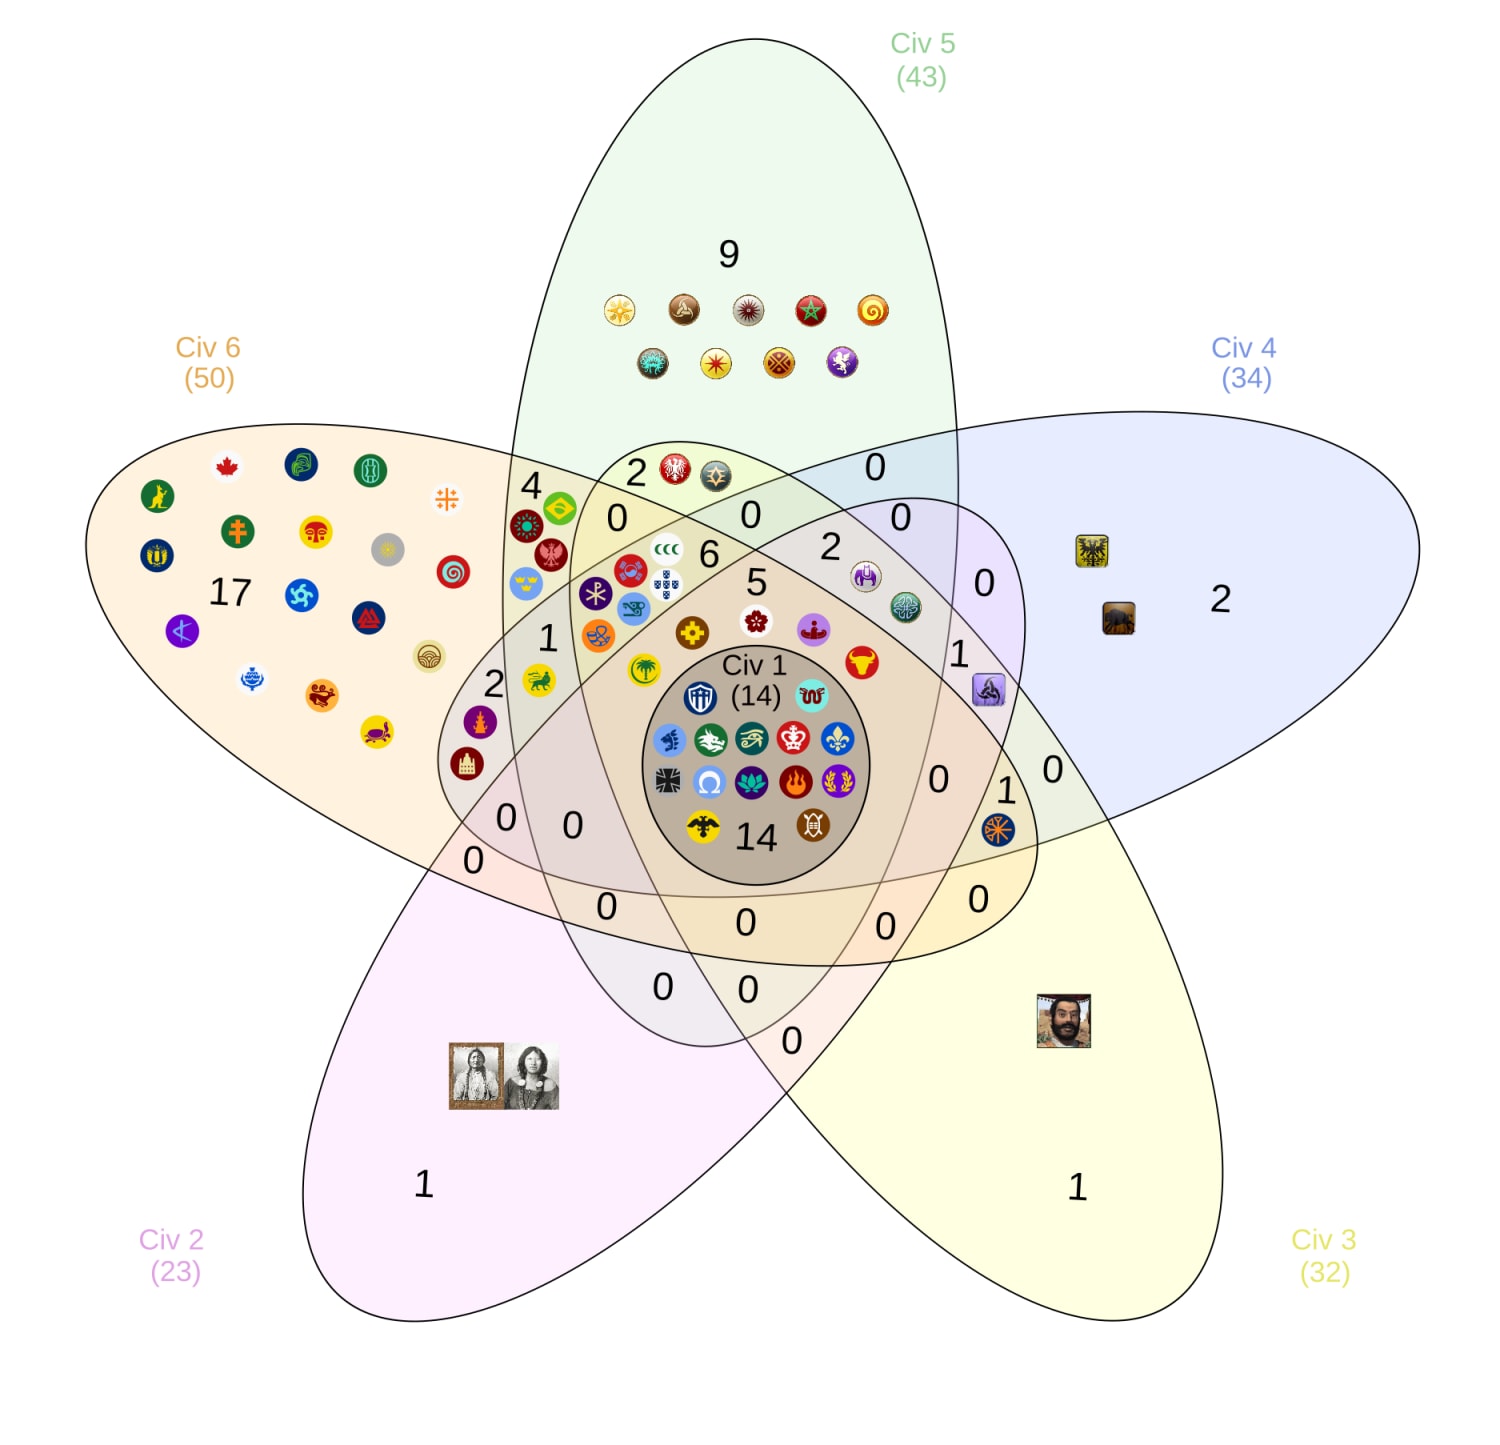 I made a Venn diagram of which civs were present in which Civilization games